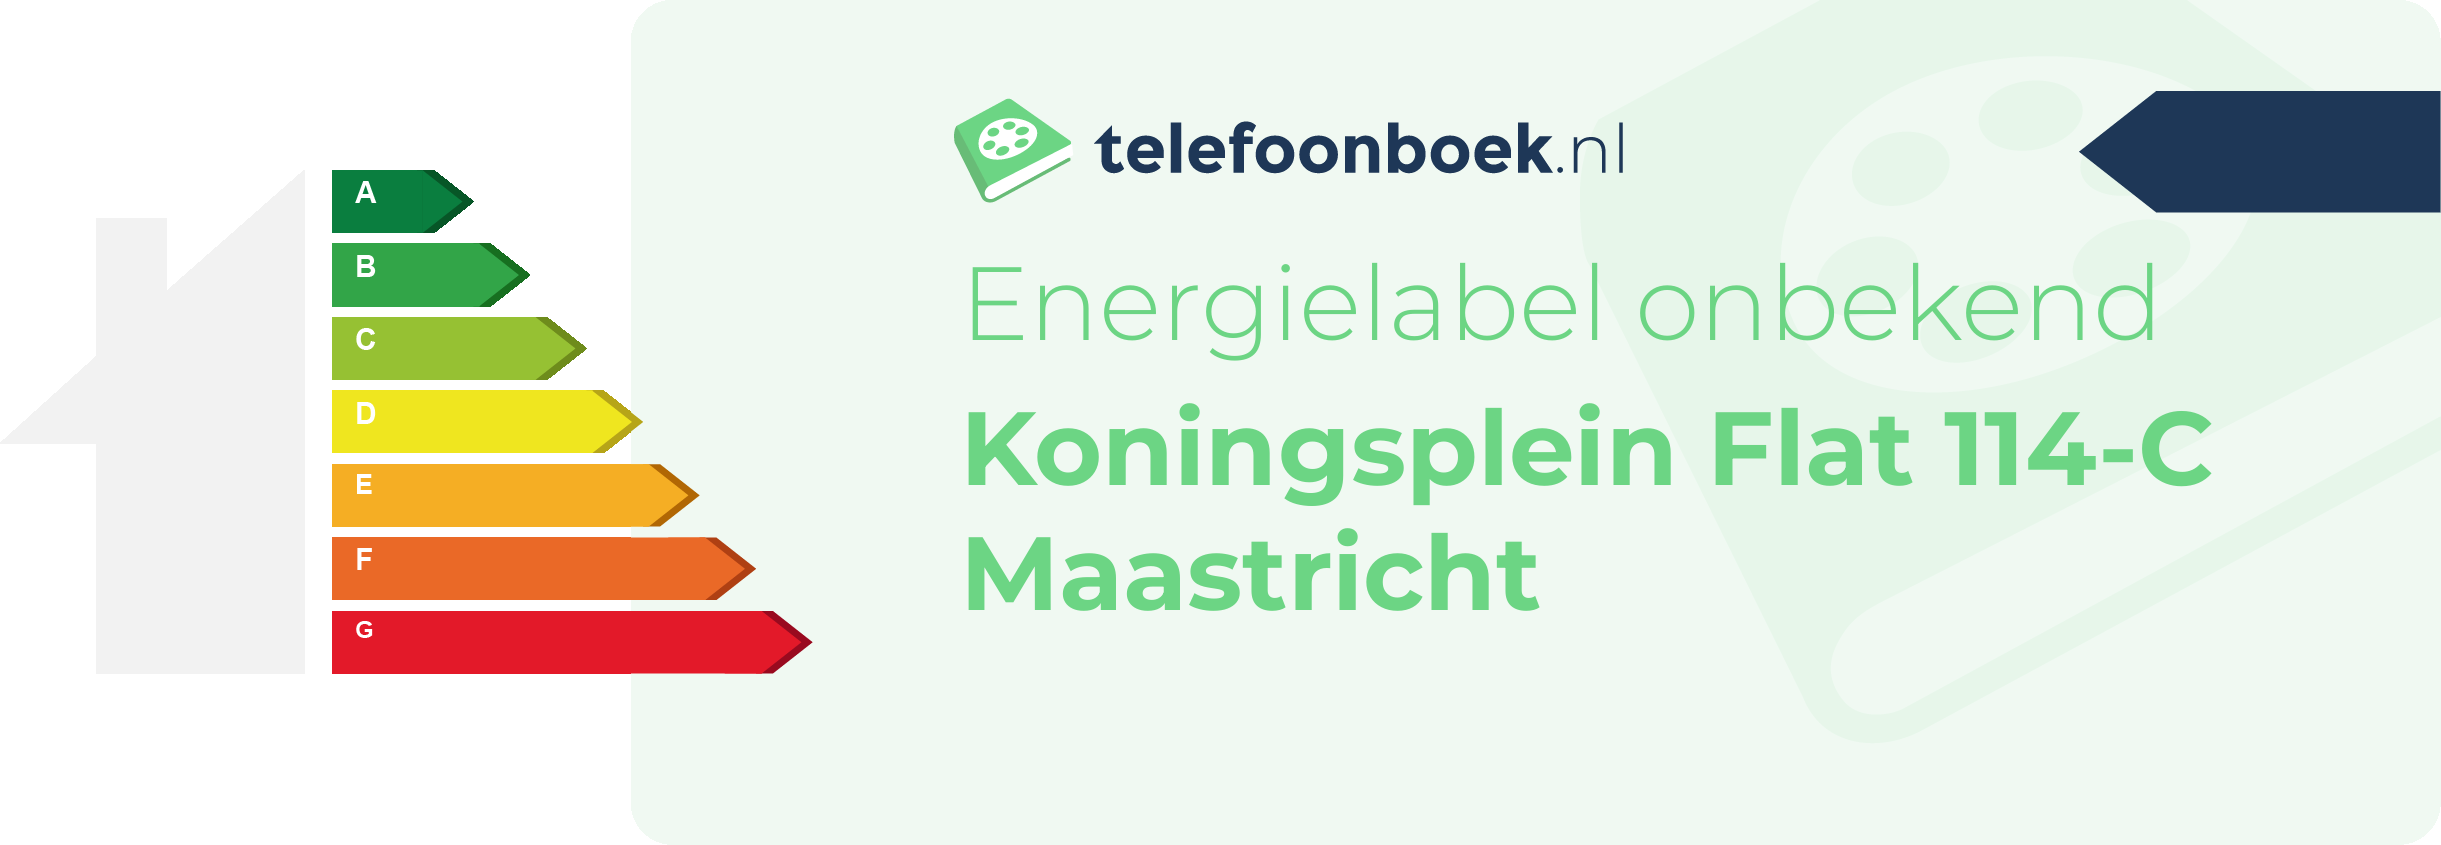 Energielabel Koningsplein Flat 114-C Maastricht